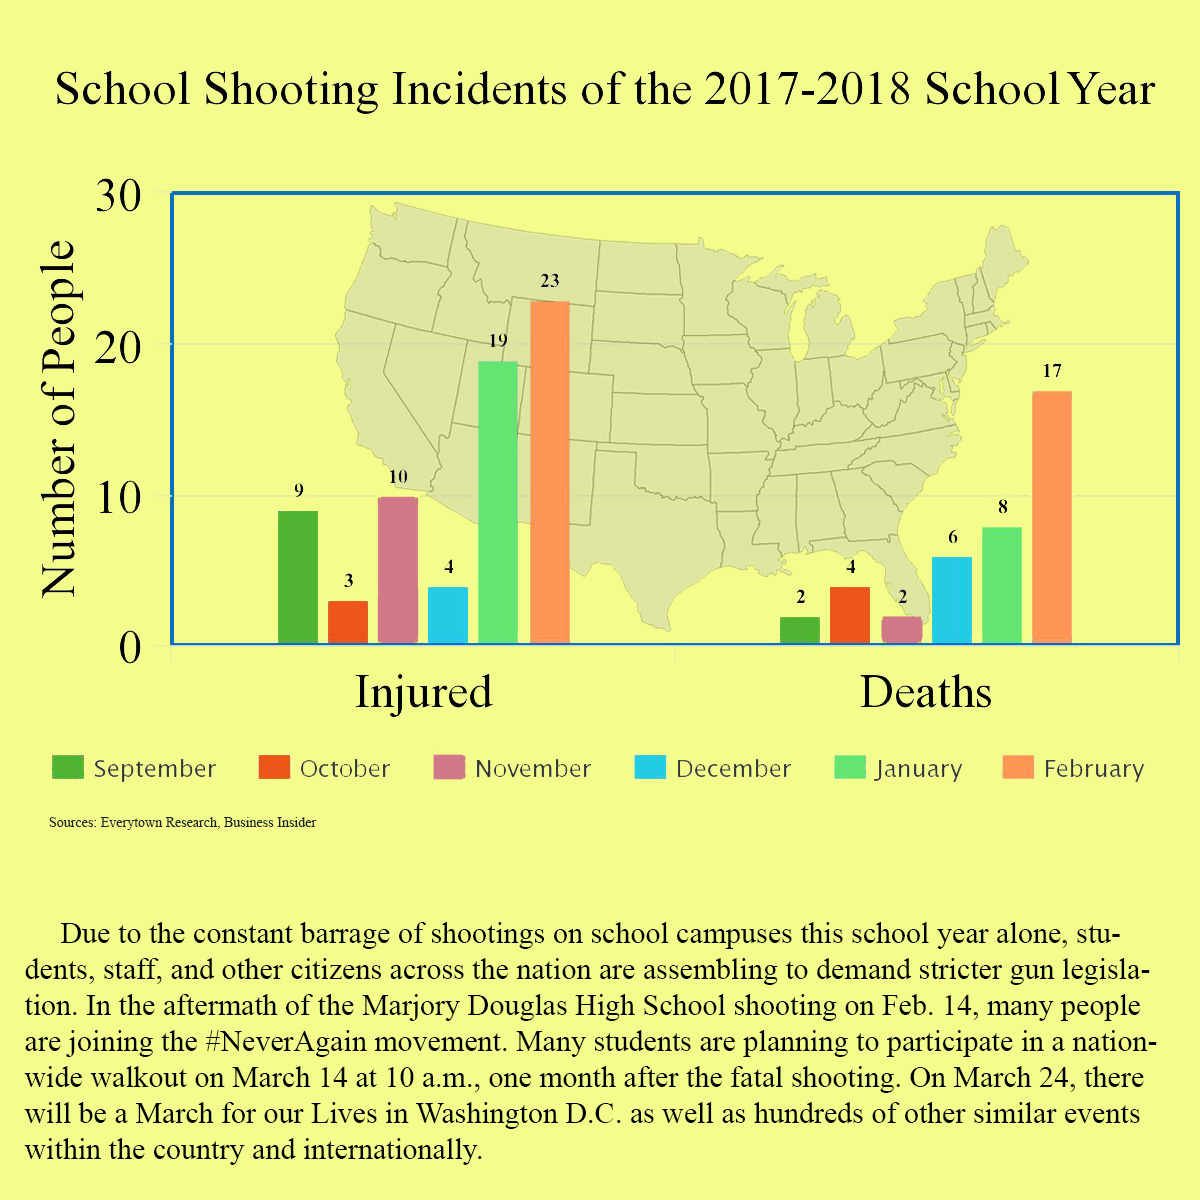 School shooting incidents of the 2017-2018 school year